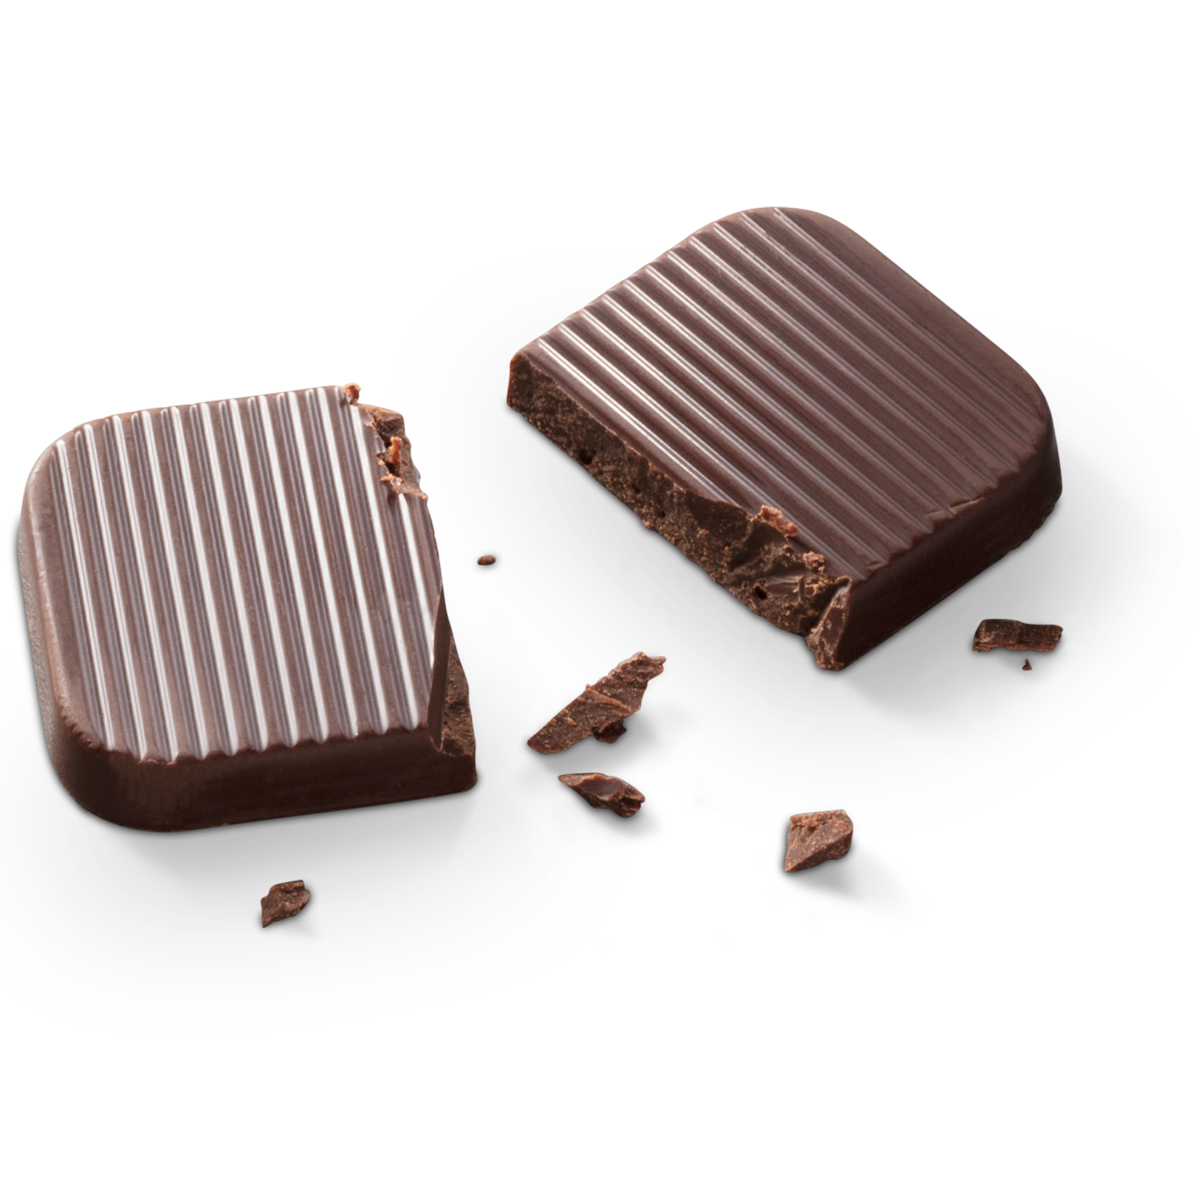 Belgian Dark Chocolate Napolitains (72% Cacao) 11.6 OZ (.73 LB/330g)